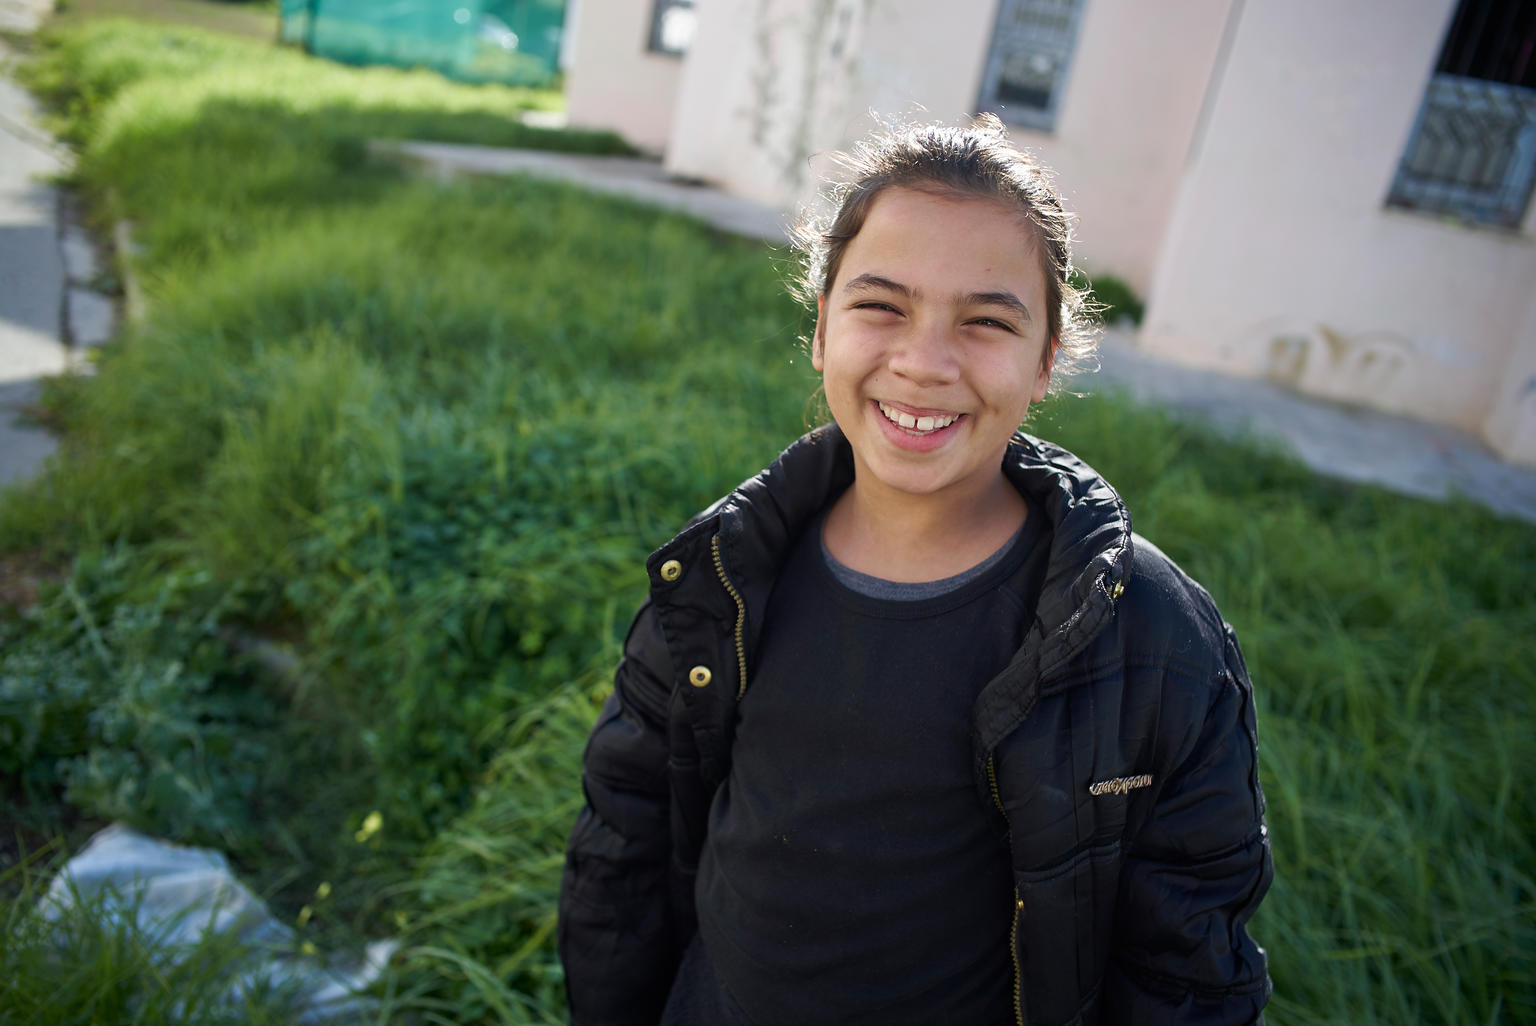 A girl in Tunisia smiles.